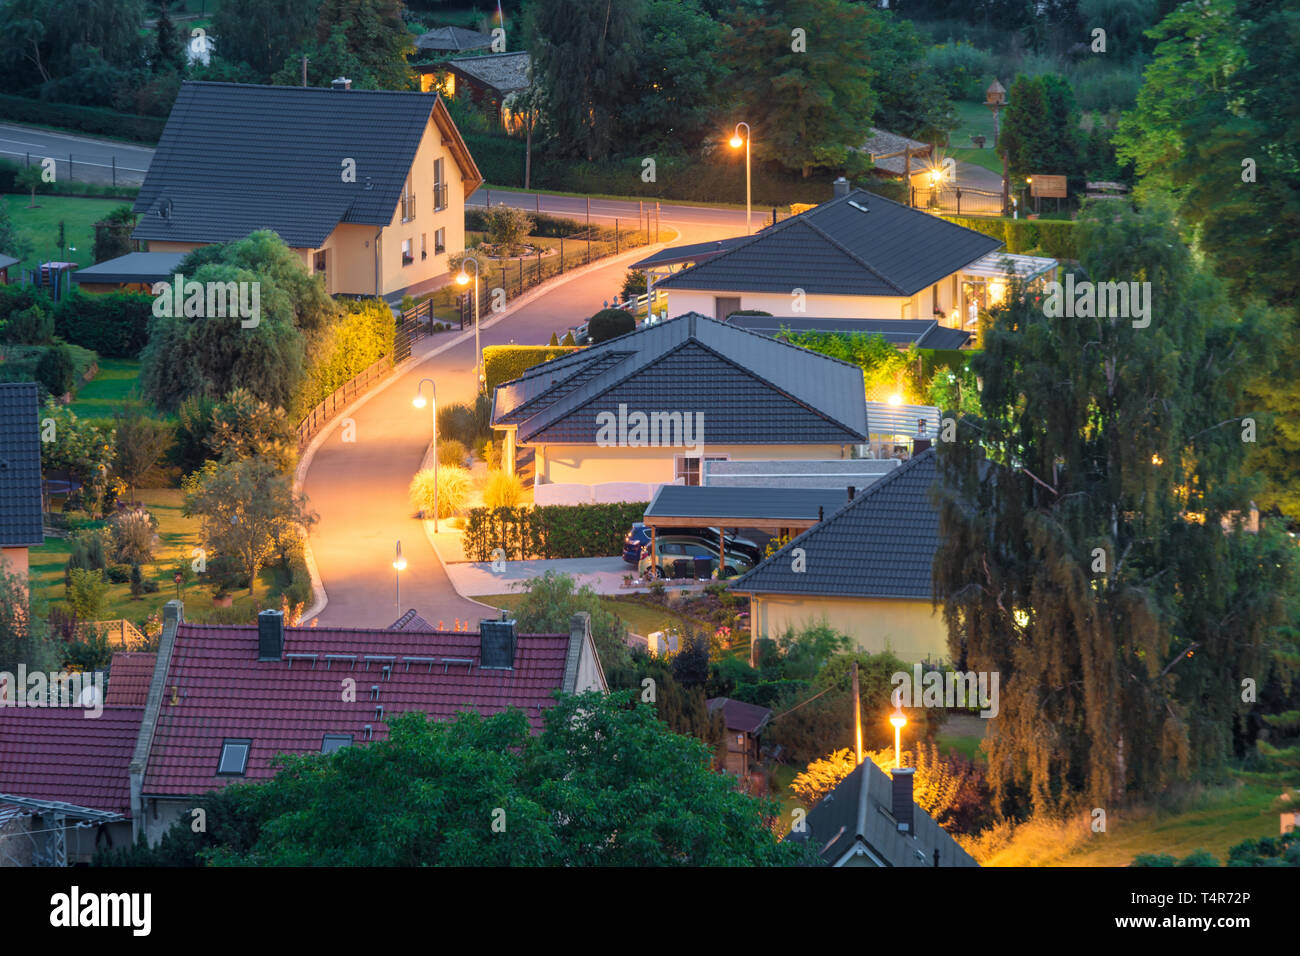 Illuminated residential area at night Stock Photo